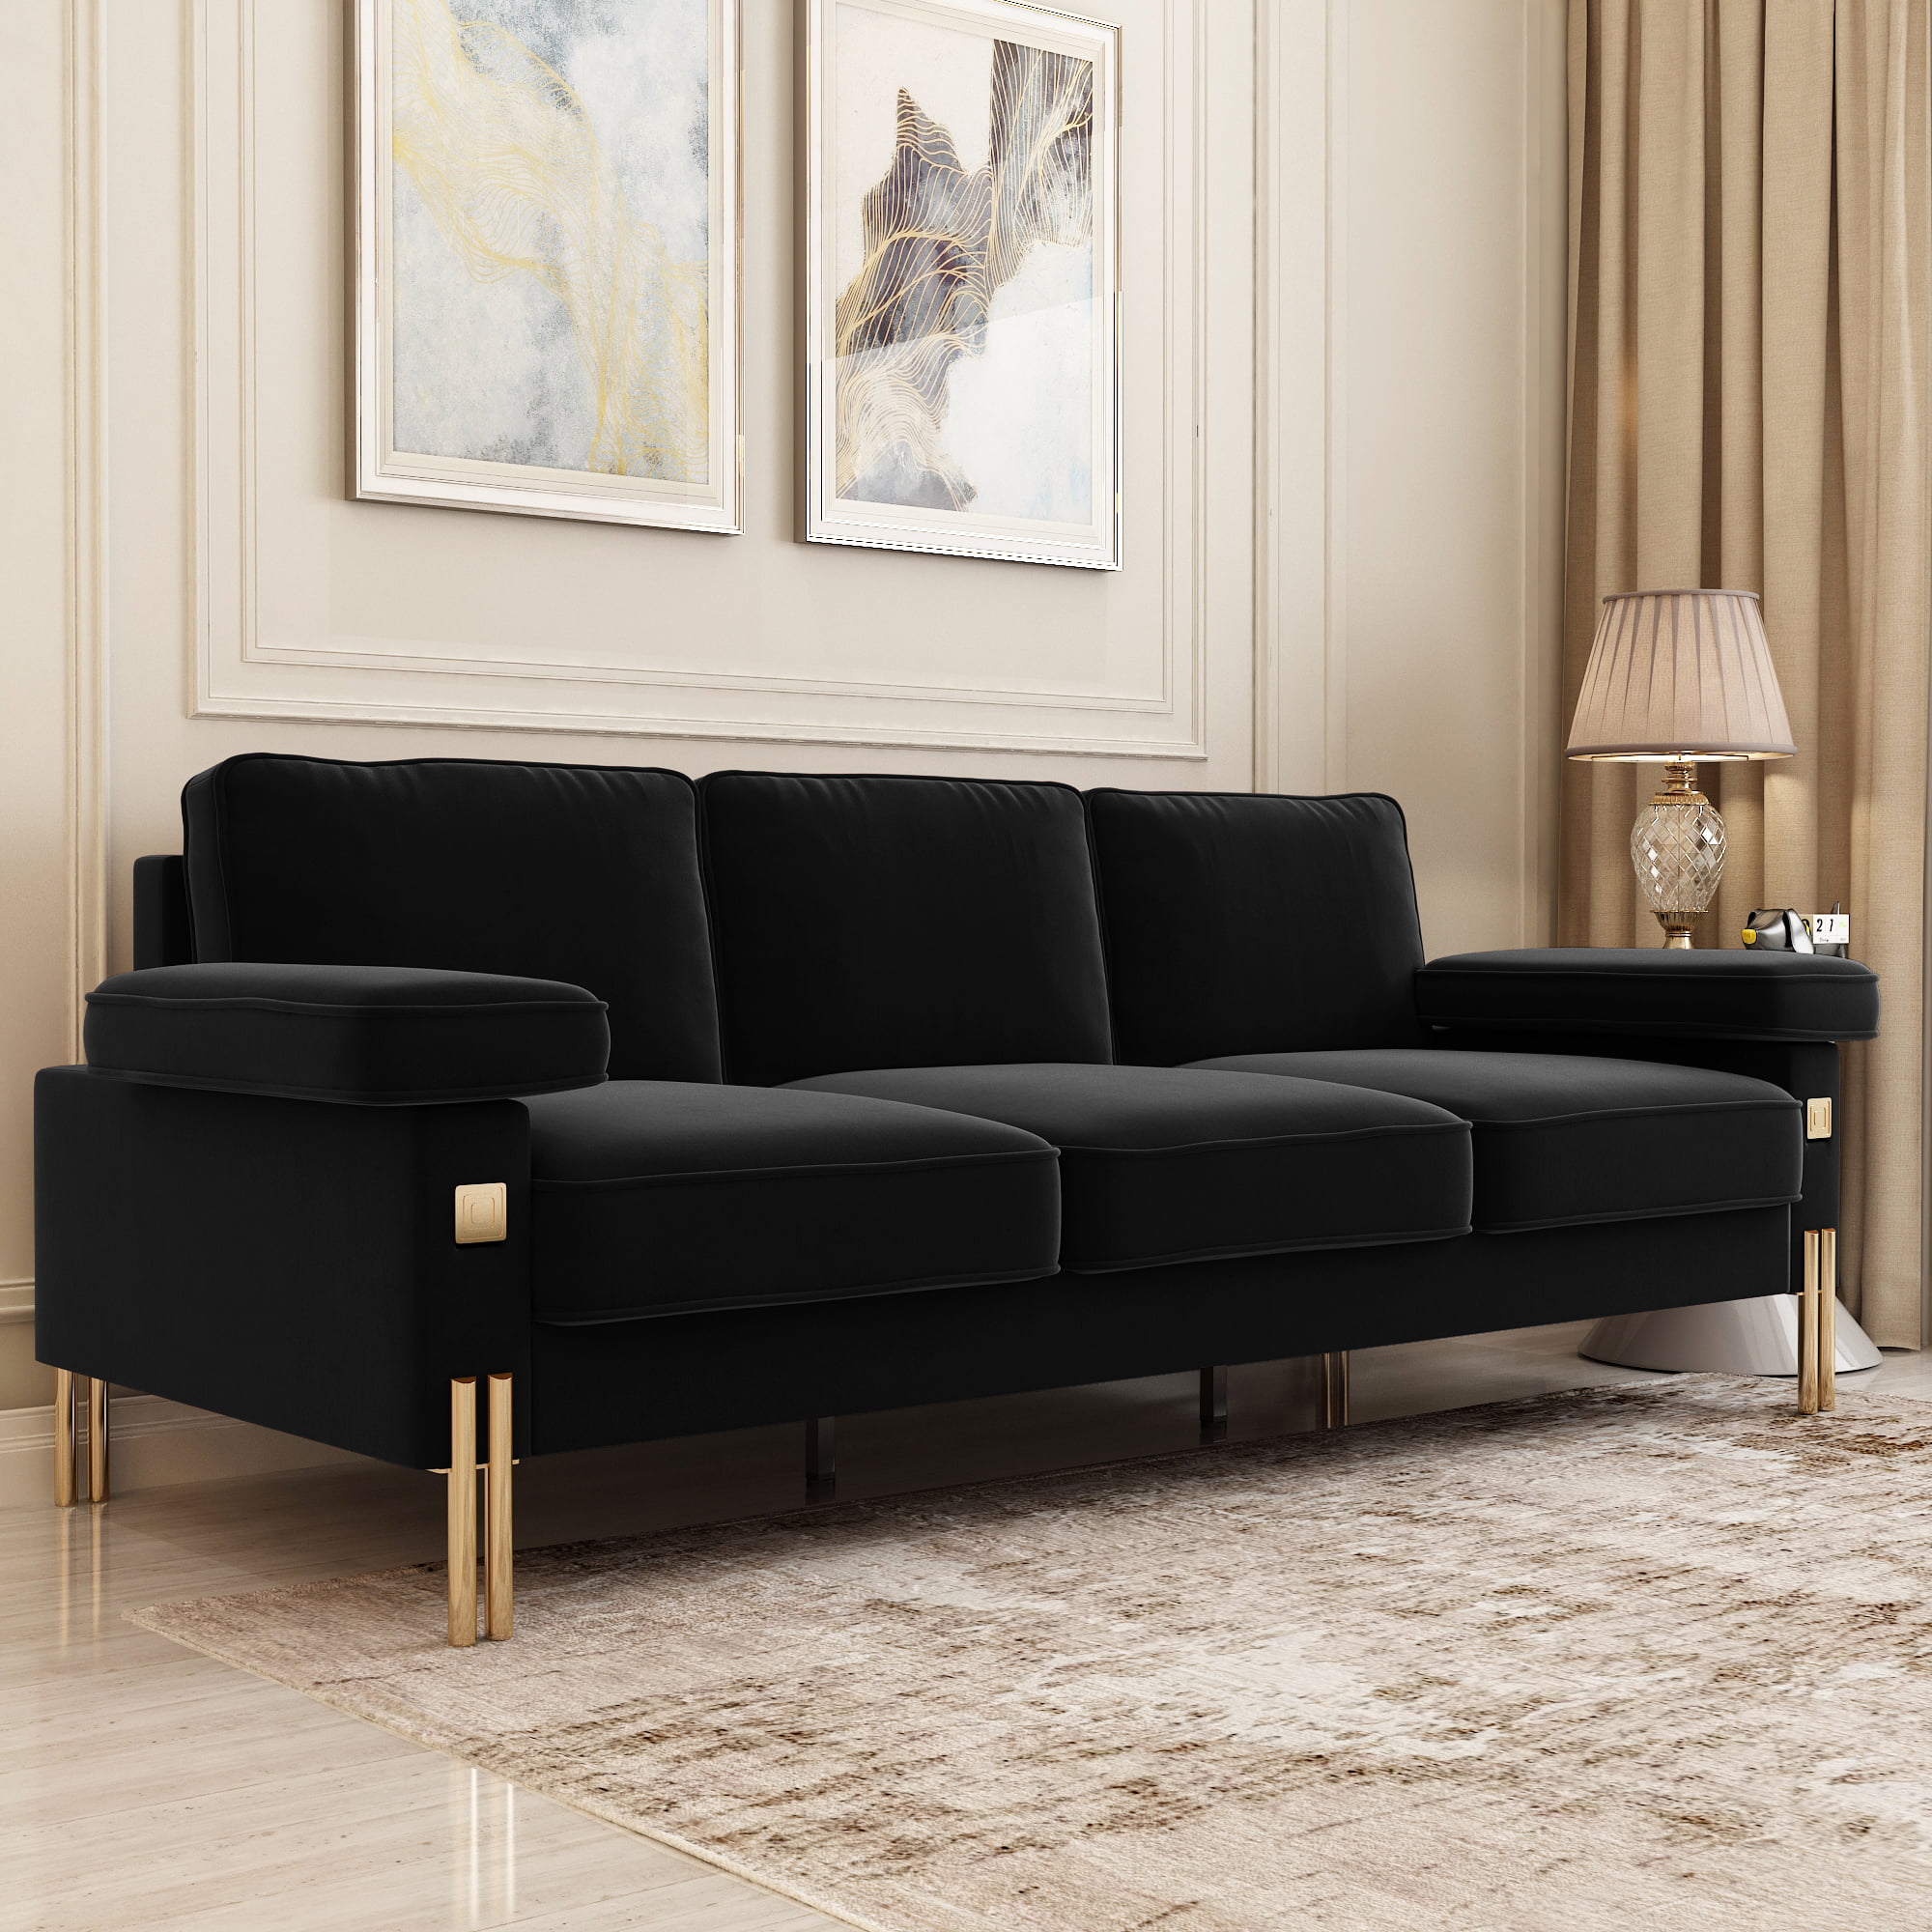 Homey Cozy 14x20 Round Zig-Zag Liner Velvet Large Sofa Couch Pillow in Black